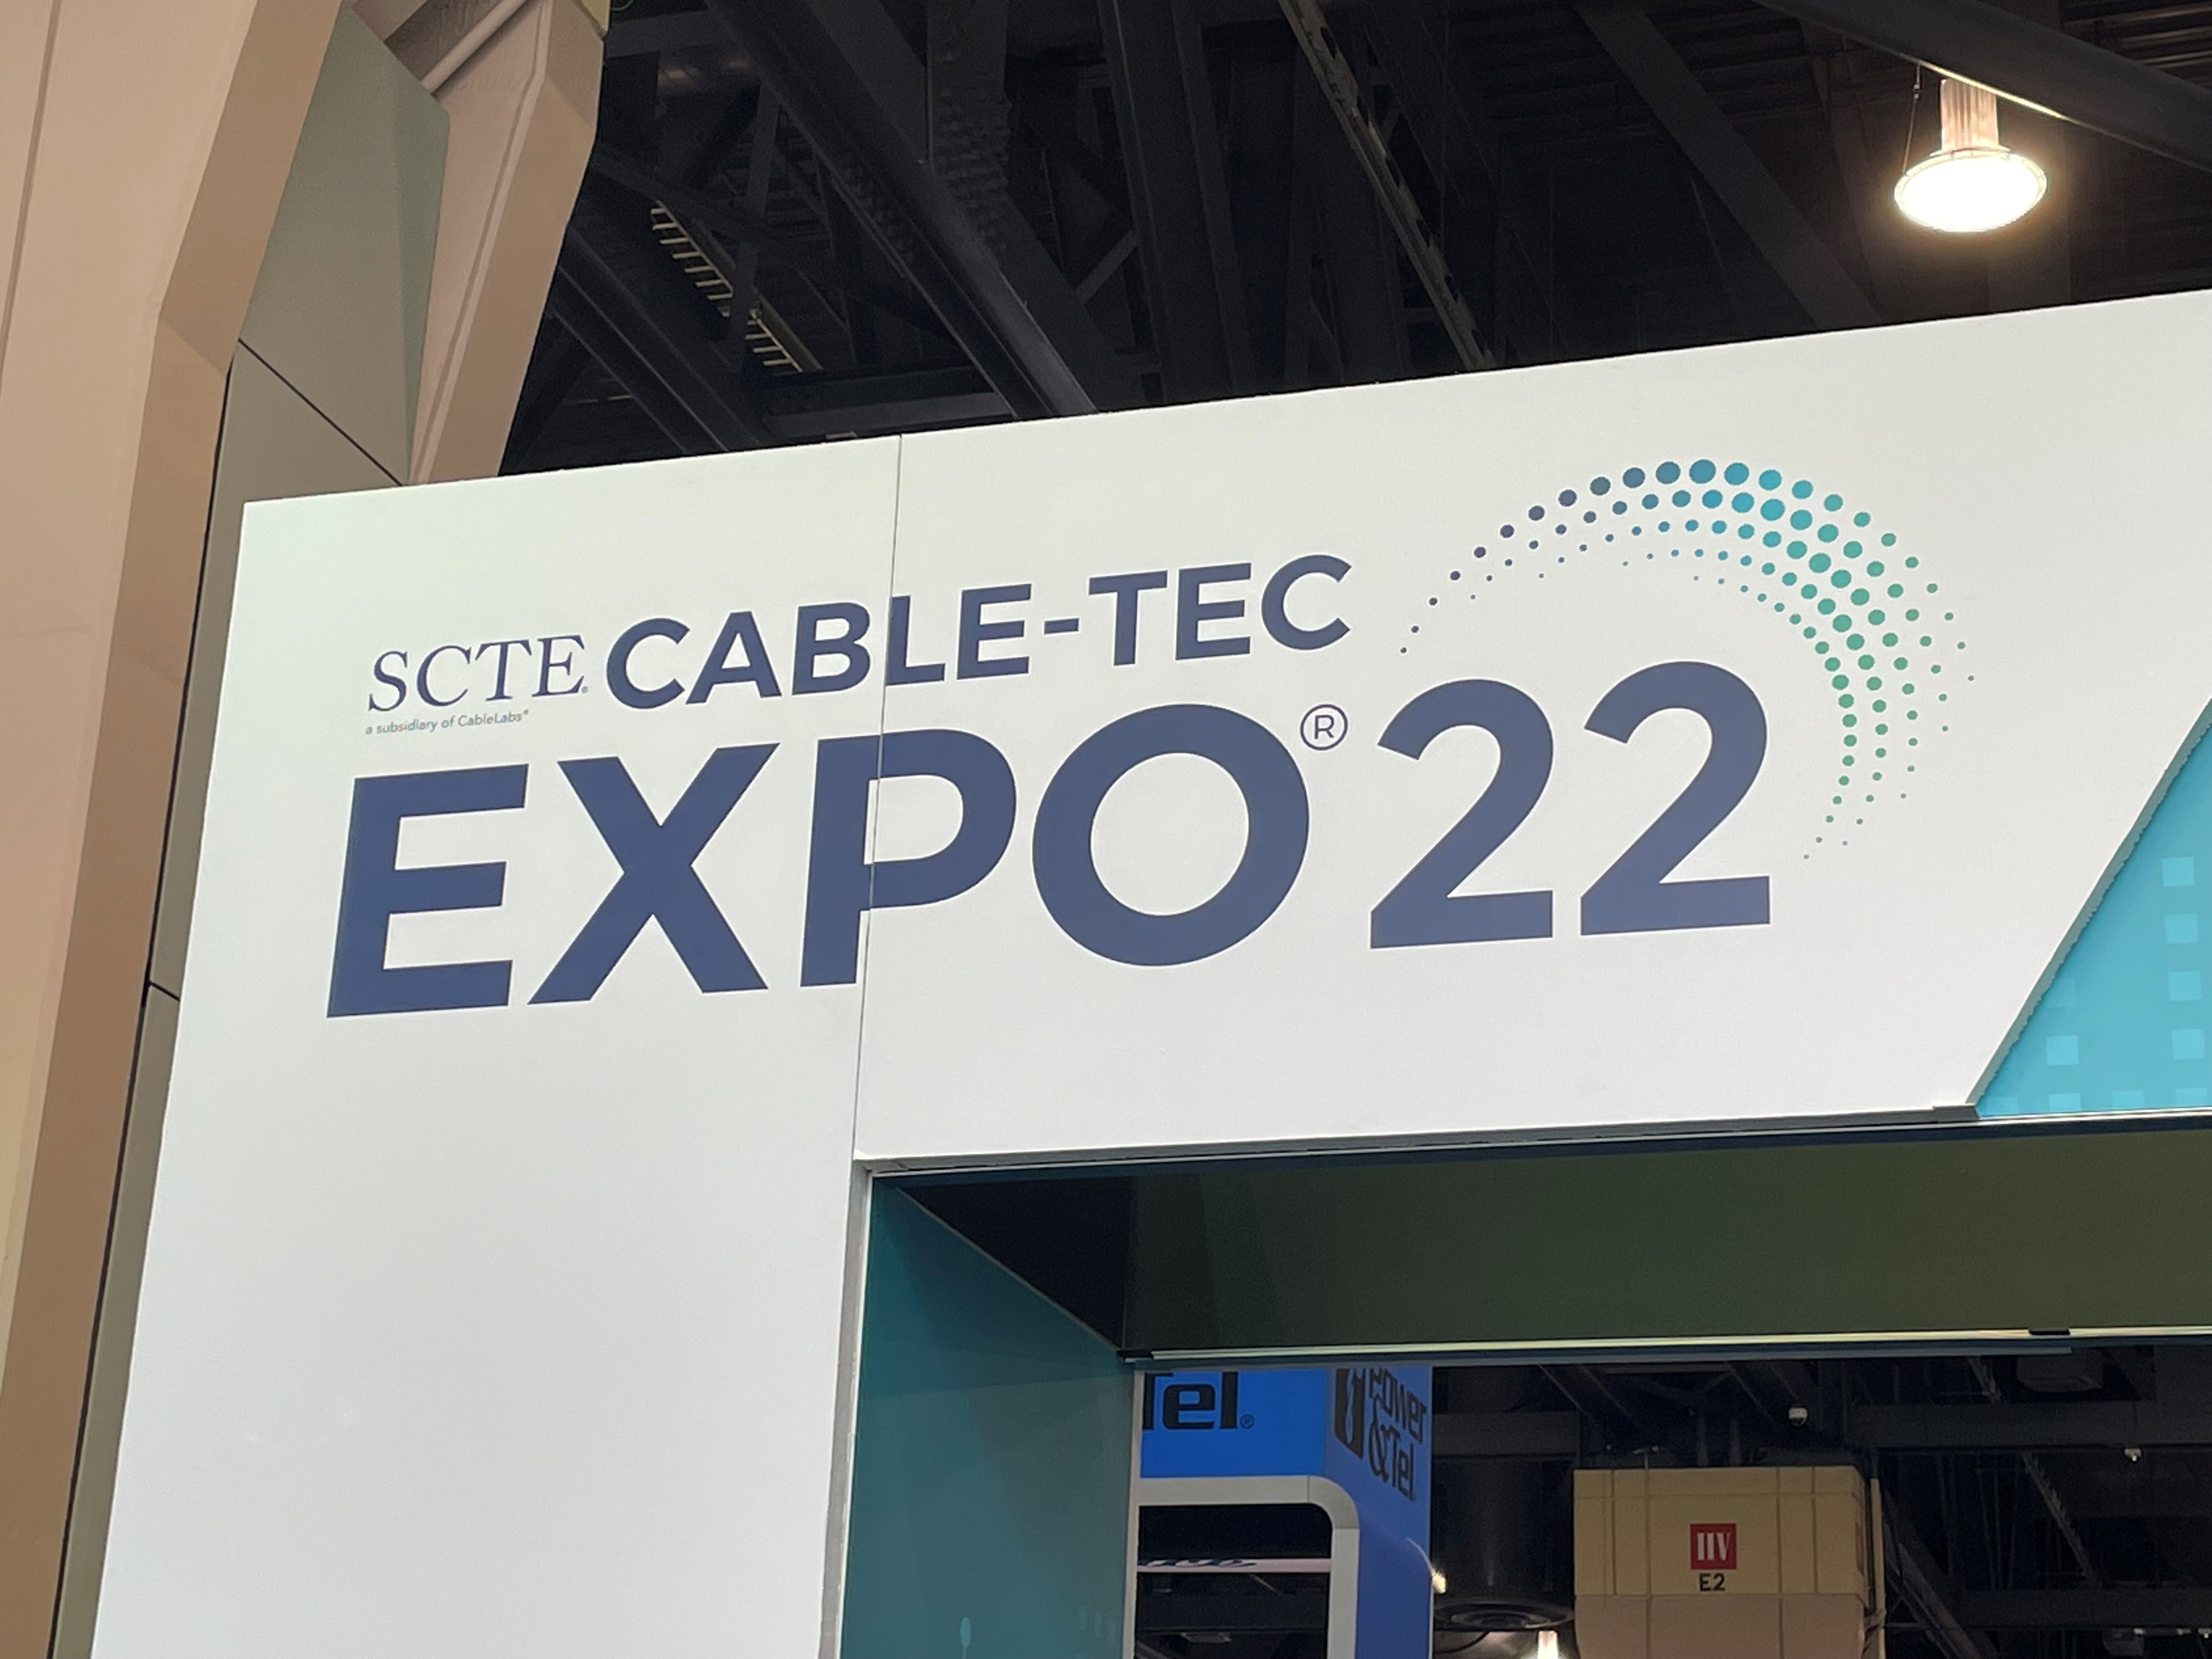 SCTE cable tec expo 2022 signage